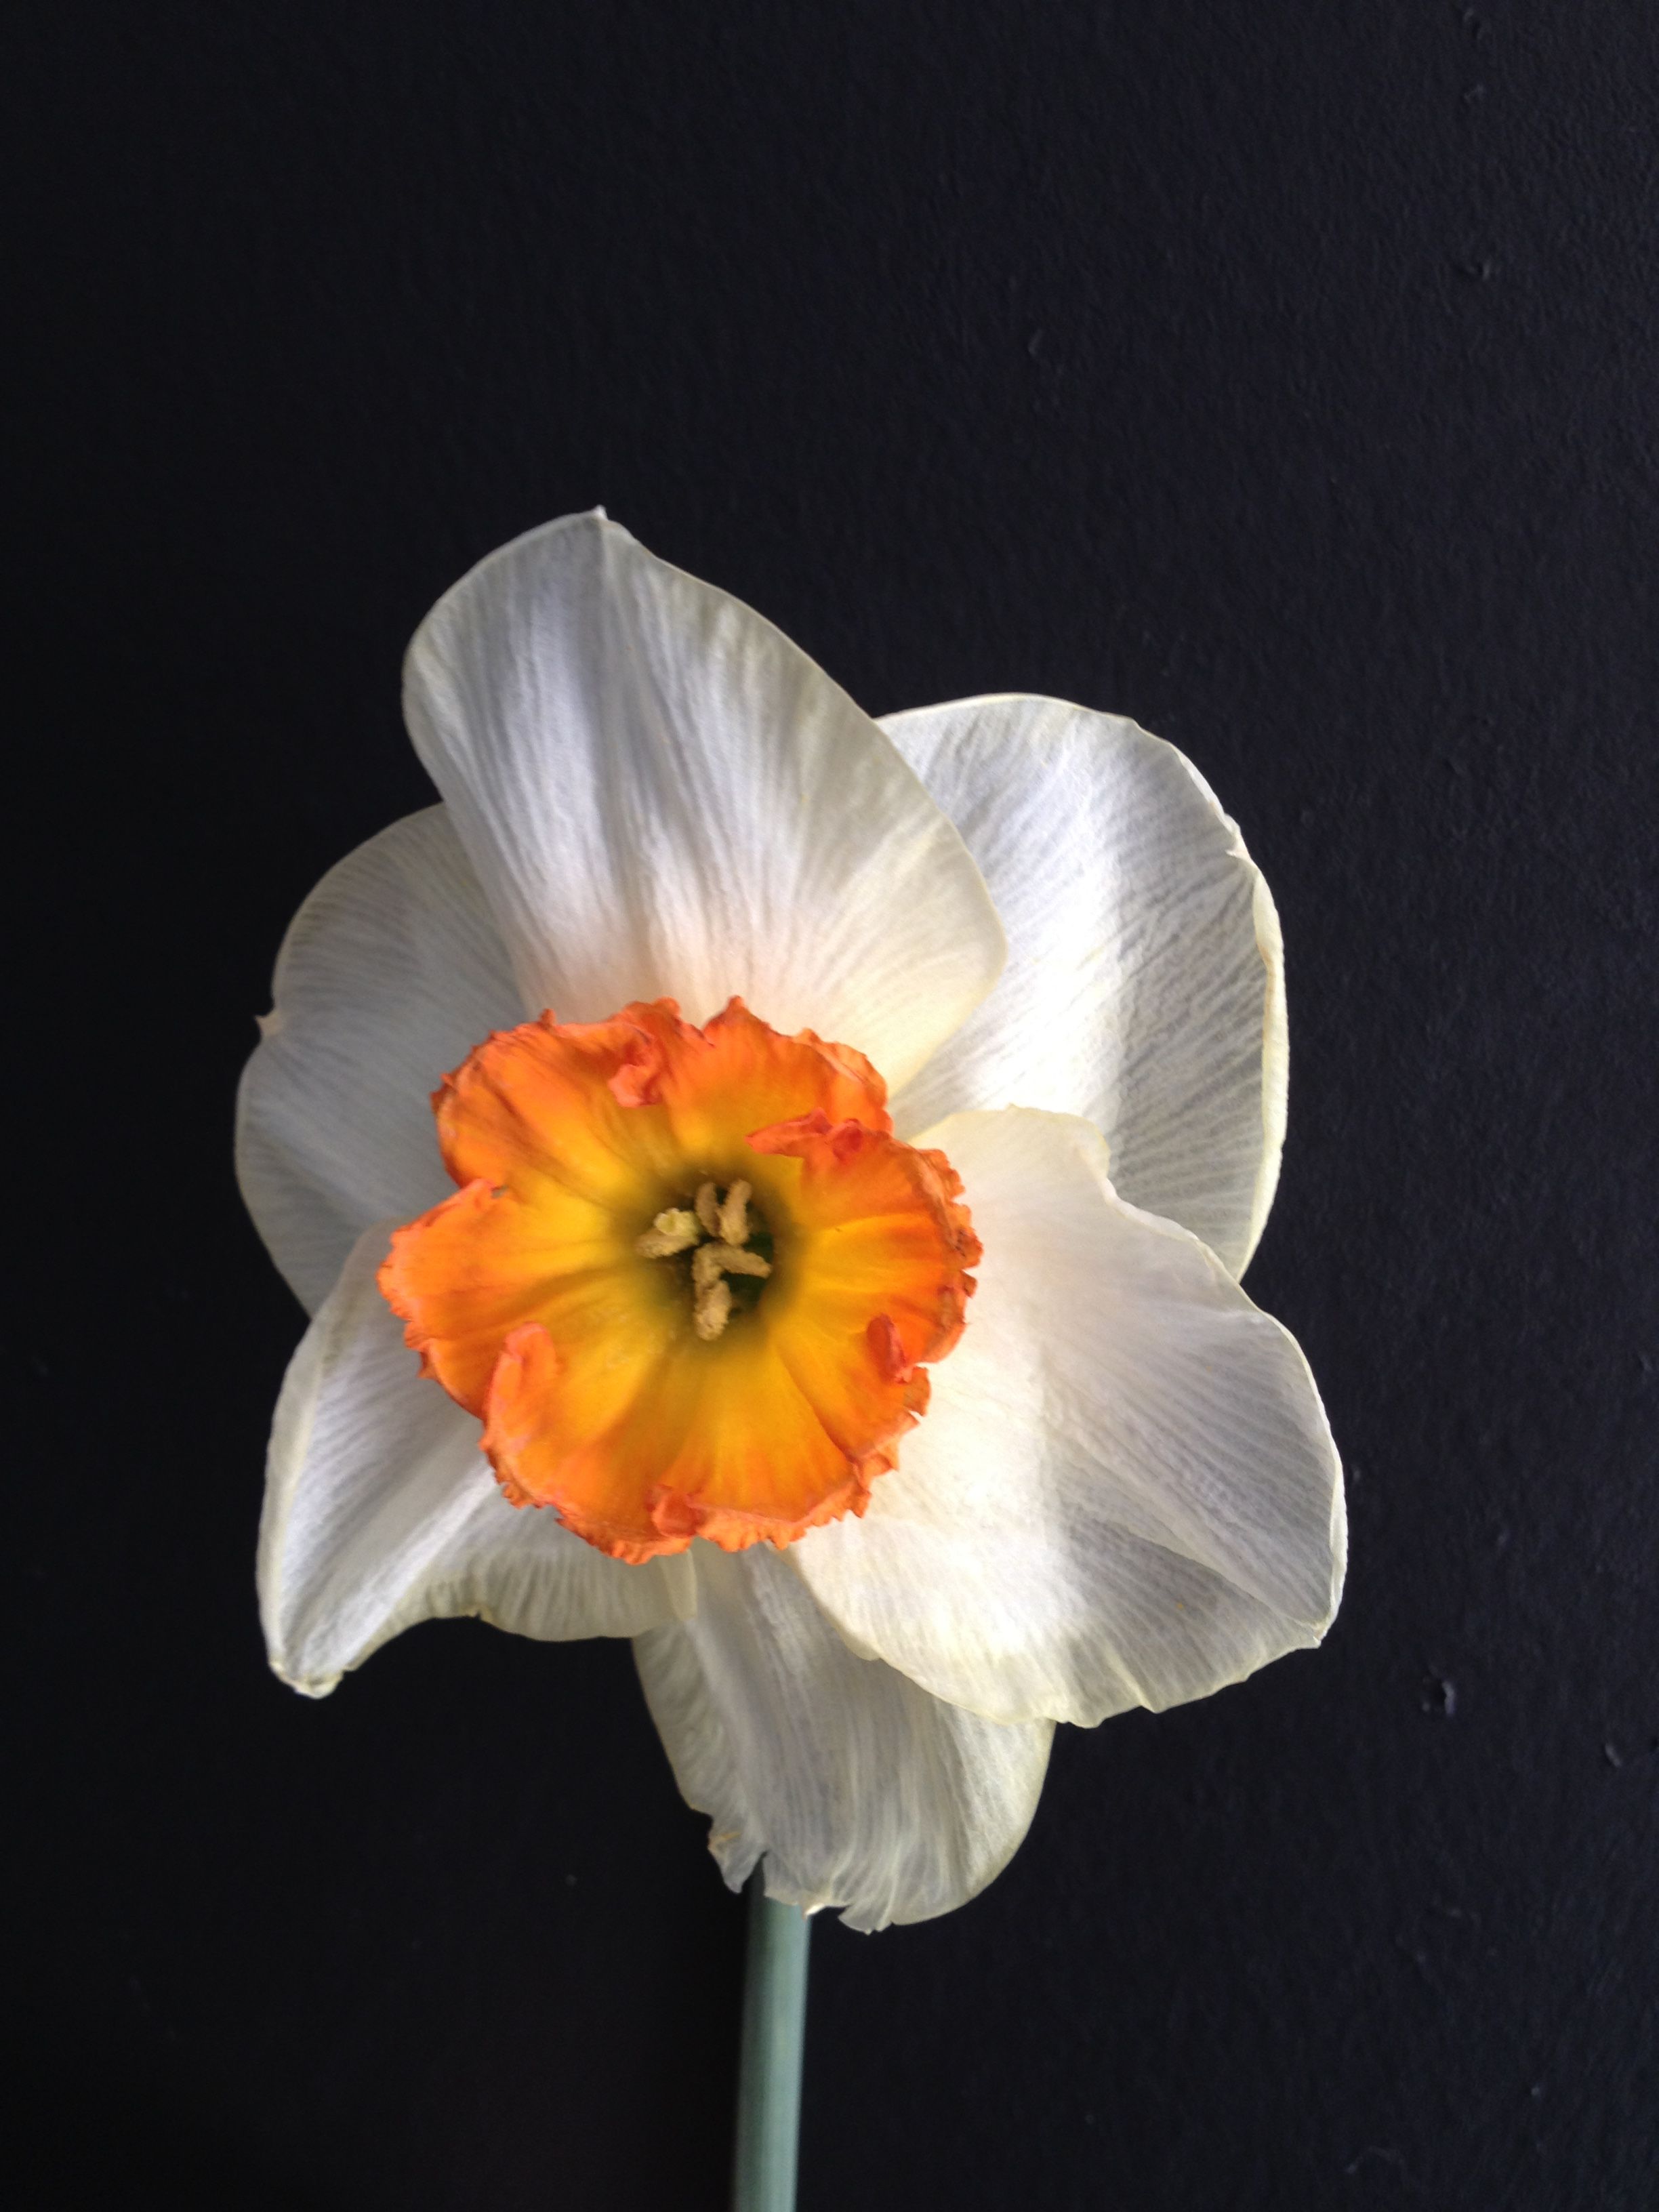 Daffodil Johann Strauss | flowers - smile of God | Pinterest ...